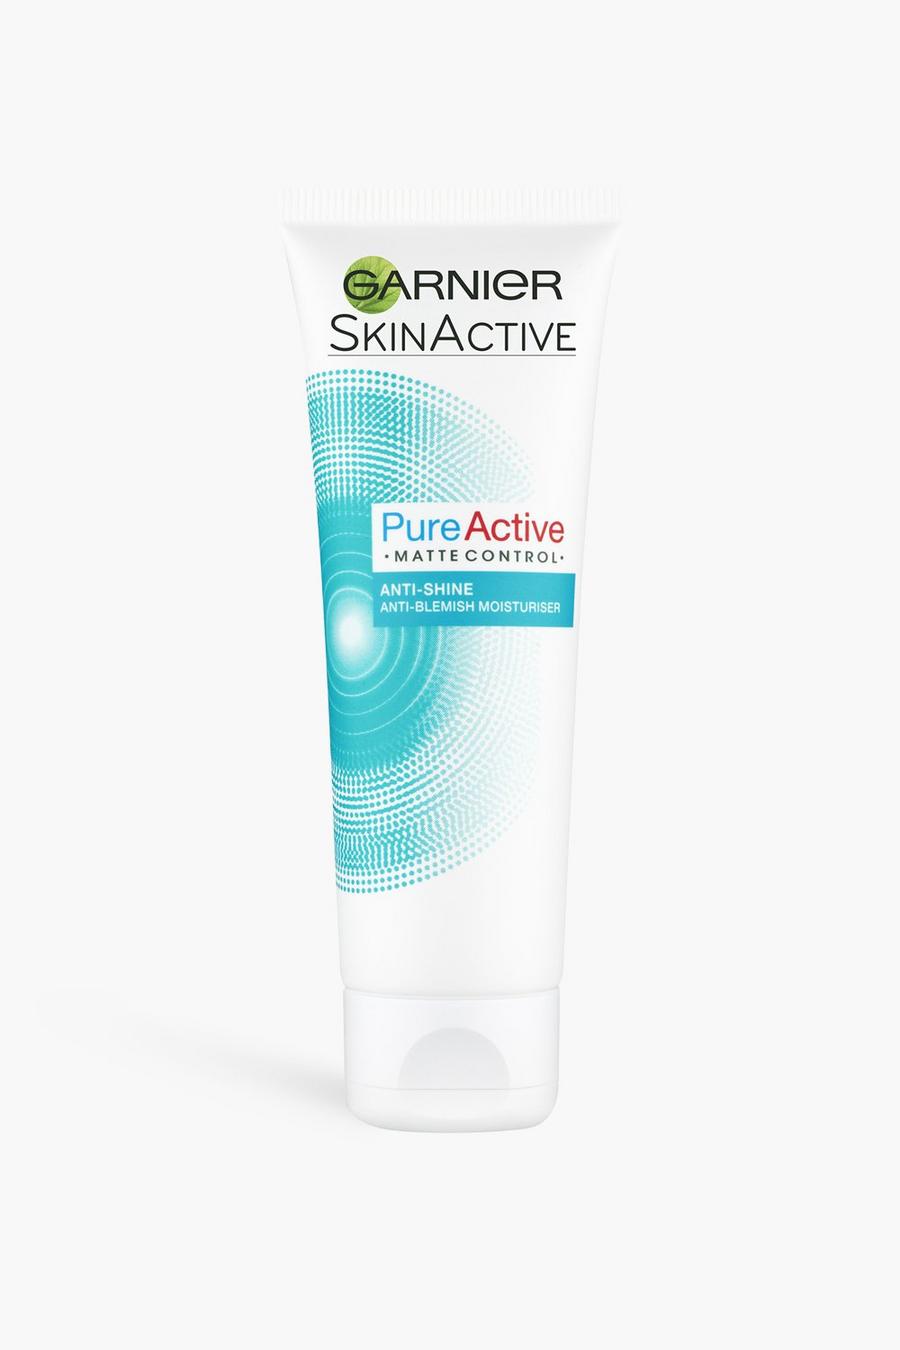 White blanco Garnier Pure Active Matte Control Anti-Blemish Face Moisturiser 50ml